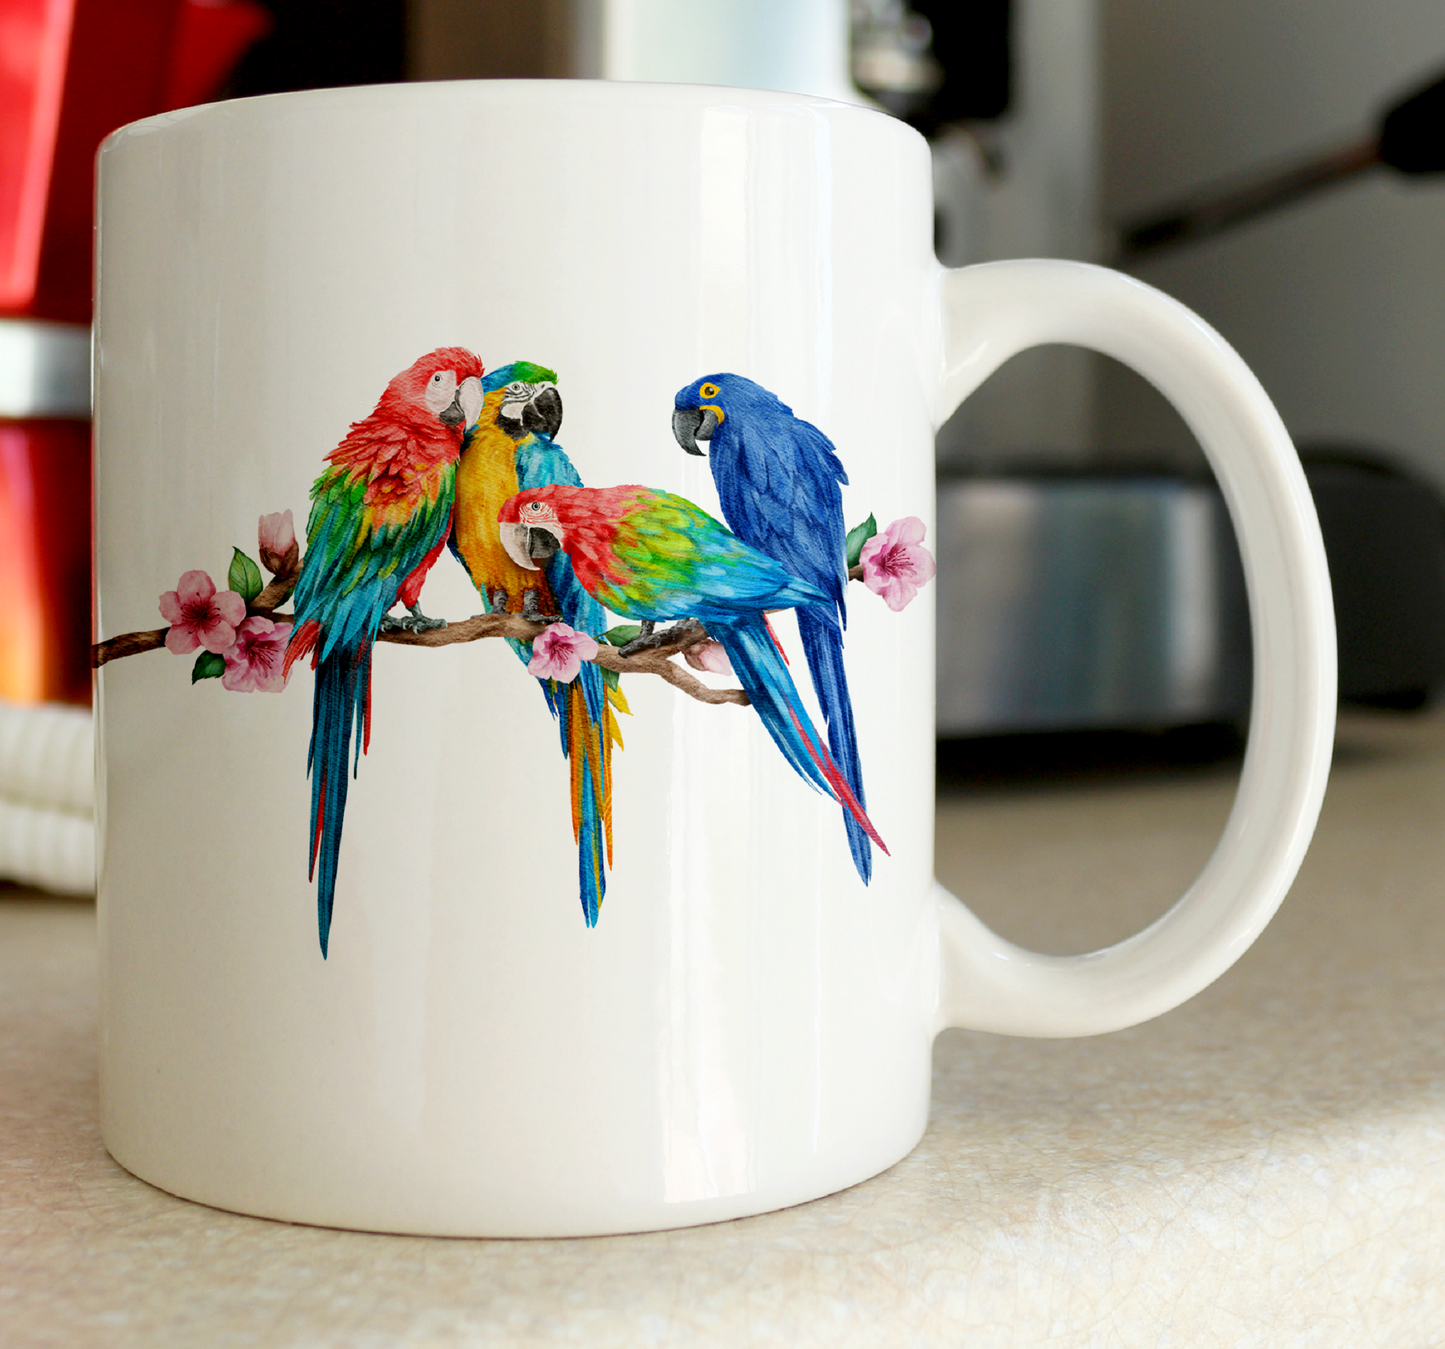  Beautiful Four Parrots Coffee Mug by Free Spirit Accessories sold by Free Spirit Accessories